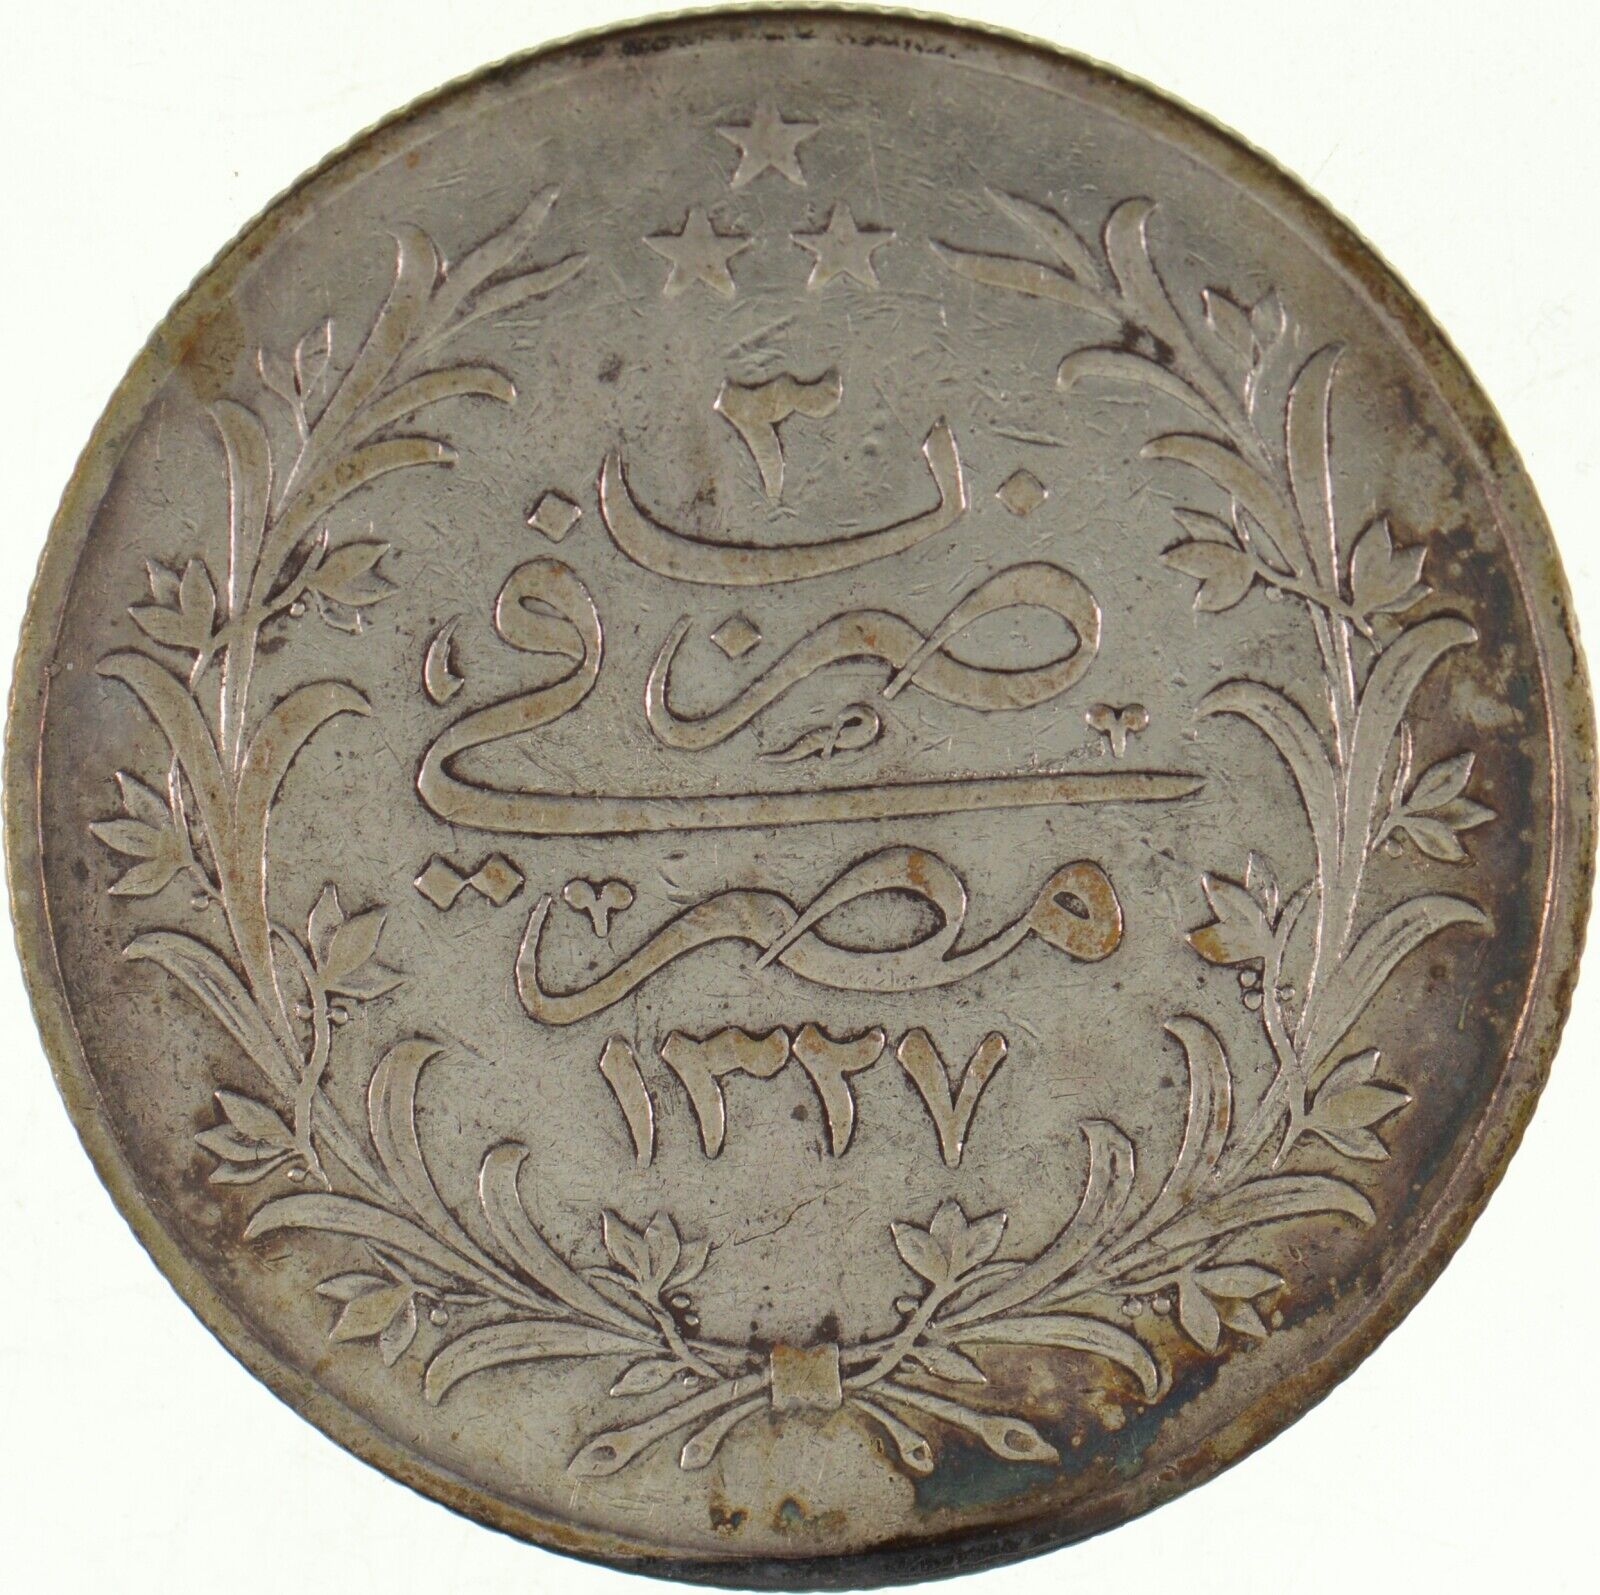 Silver - World Coin - 1910 Egypt 20 Qirsh - World Silver Coin *275